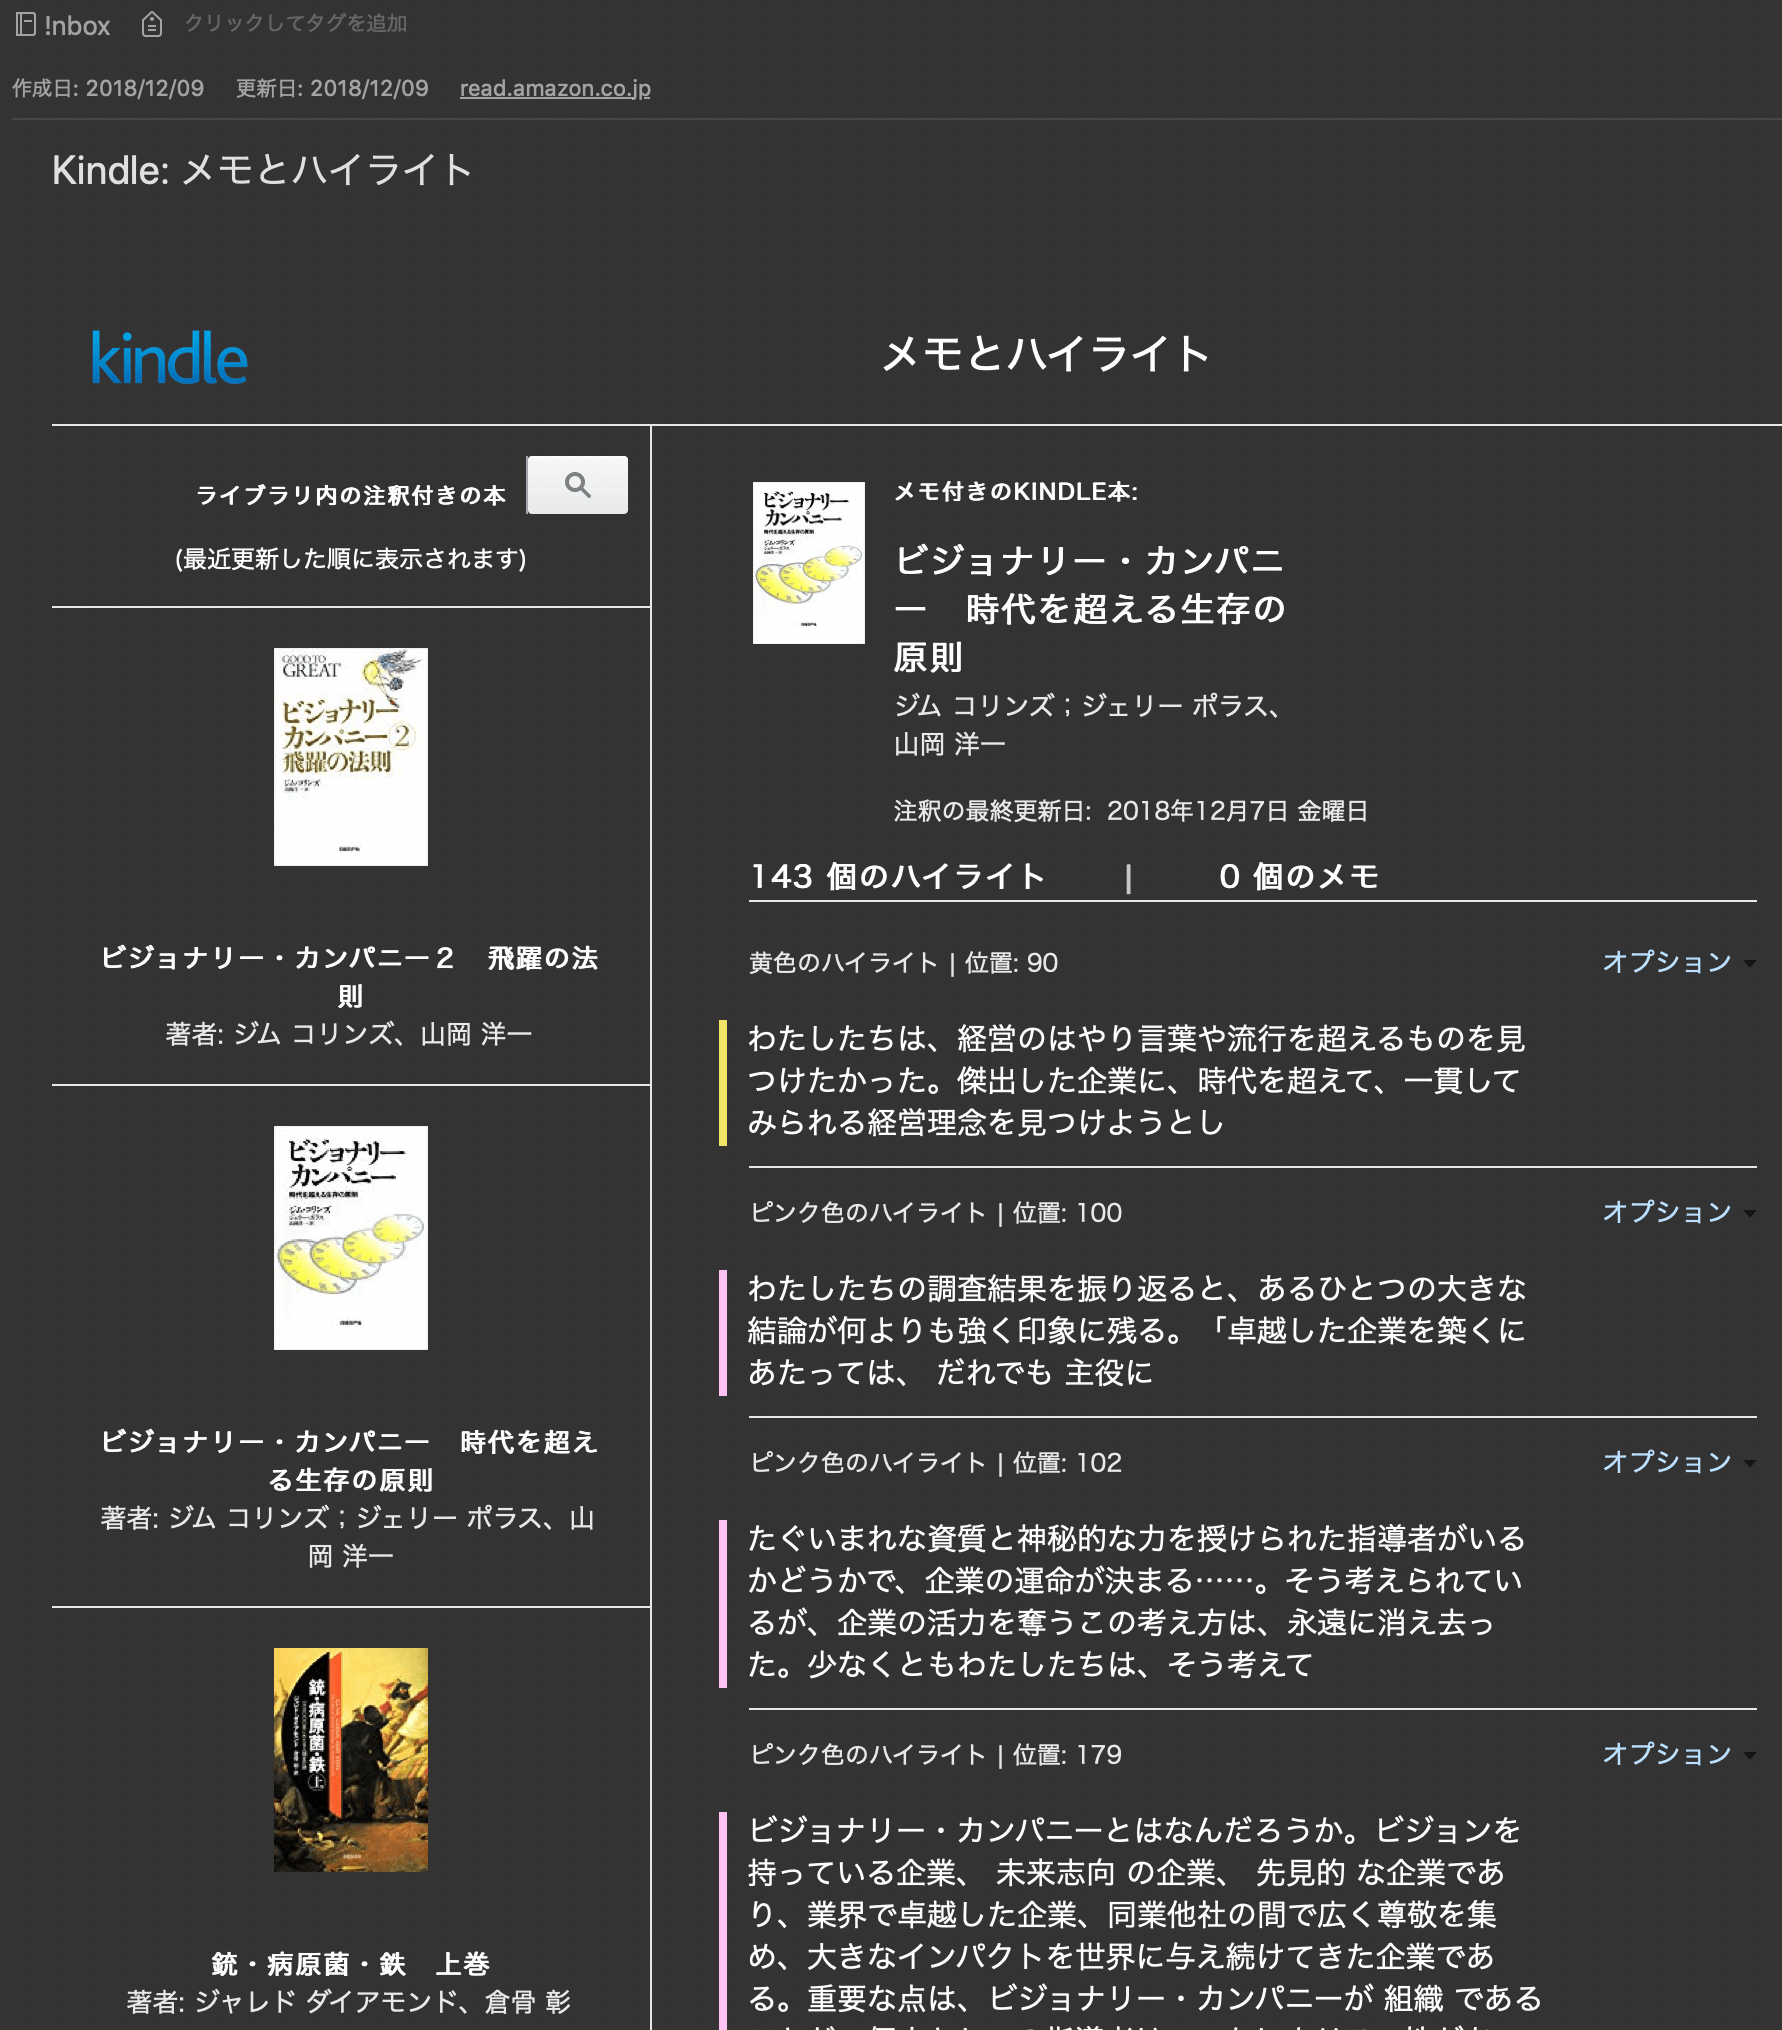 Kindleでメモとハイライトの一覧を一括でコピー ペーストする方法 Jmatsuzaki